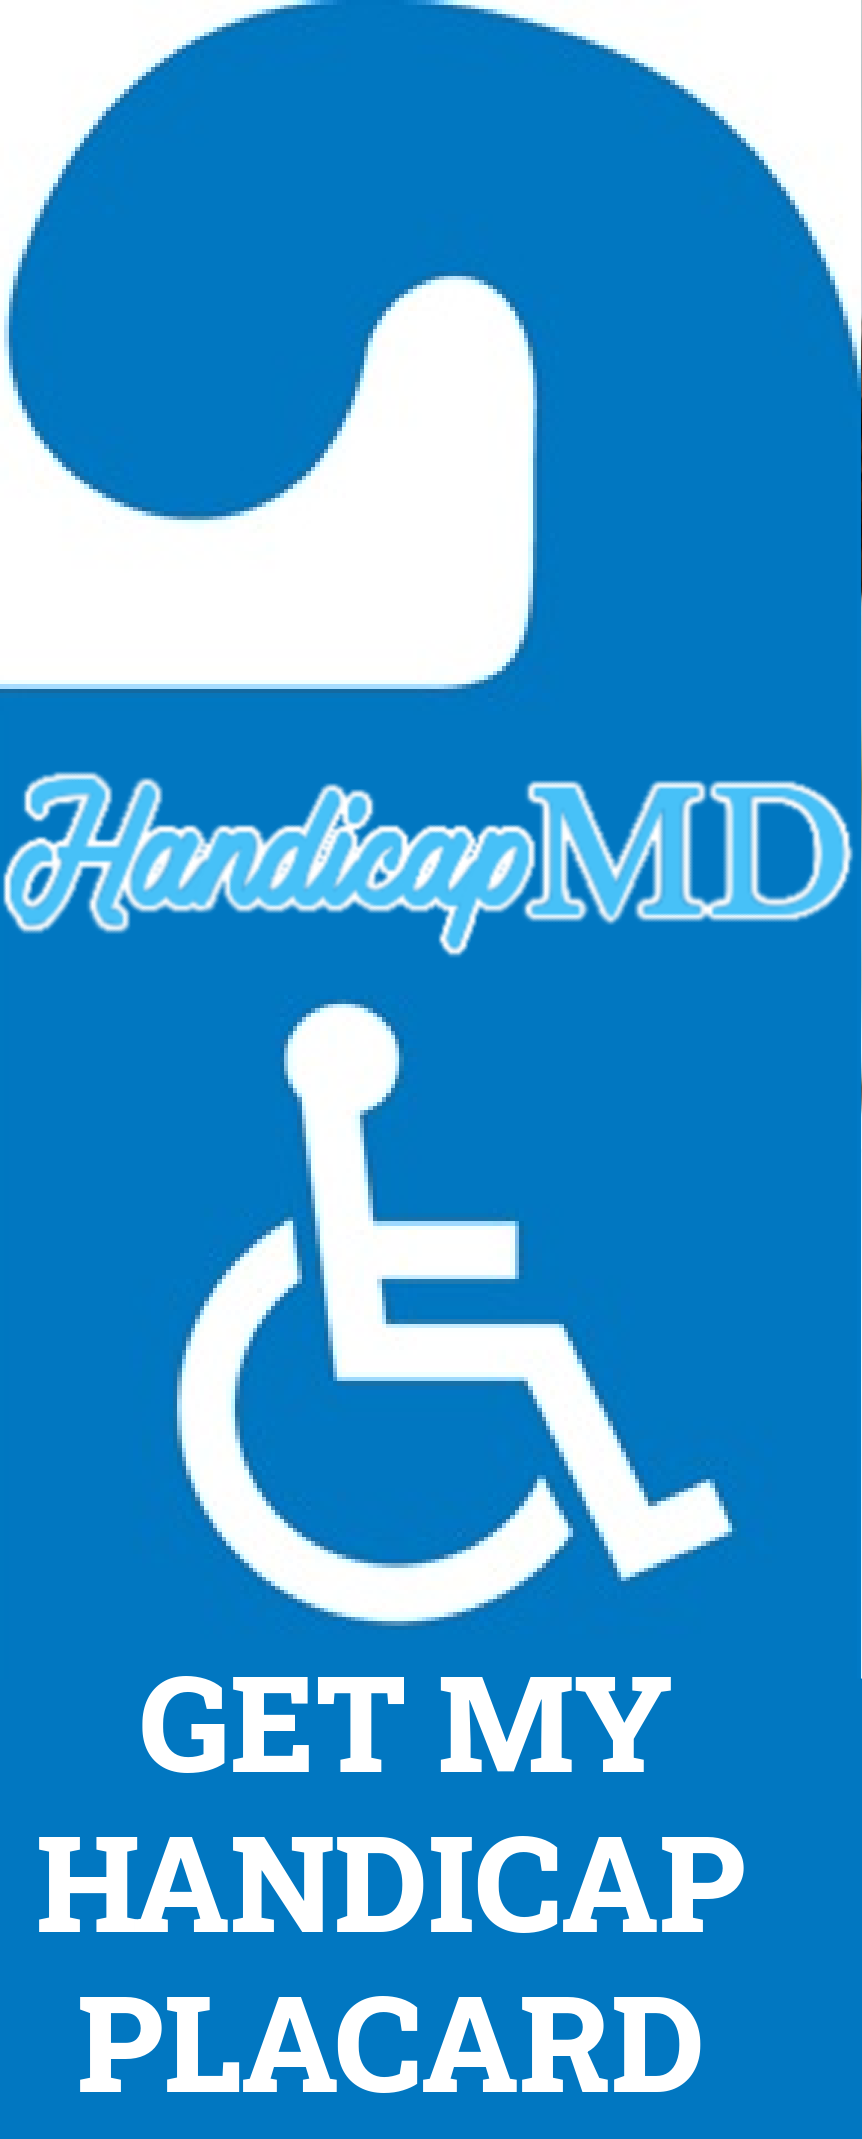 Oklahoma Handicap Parking Placards